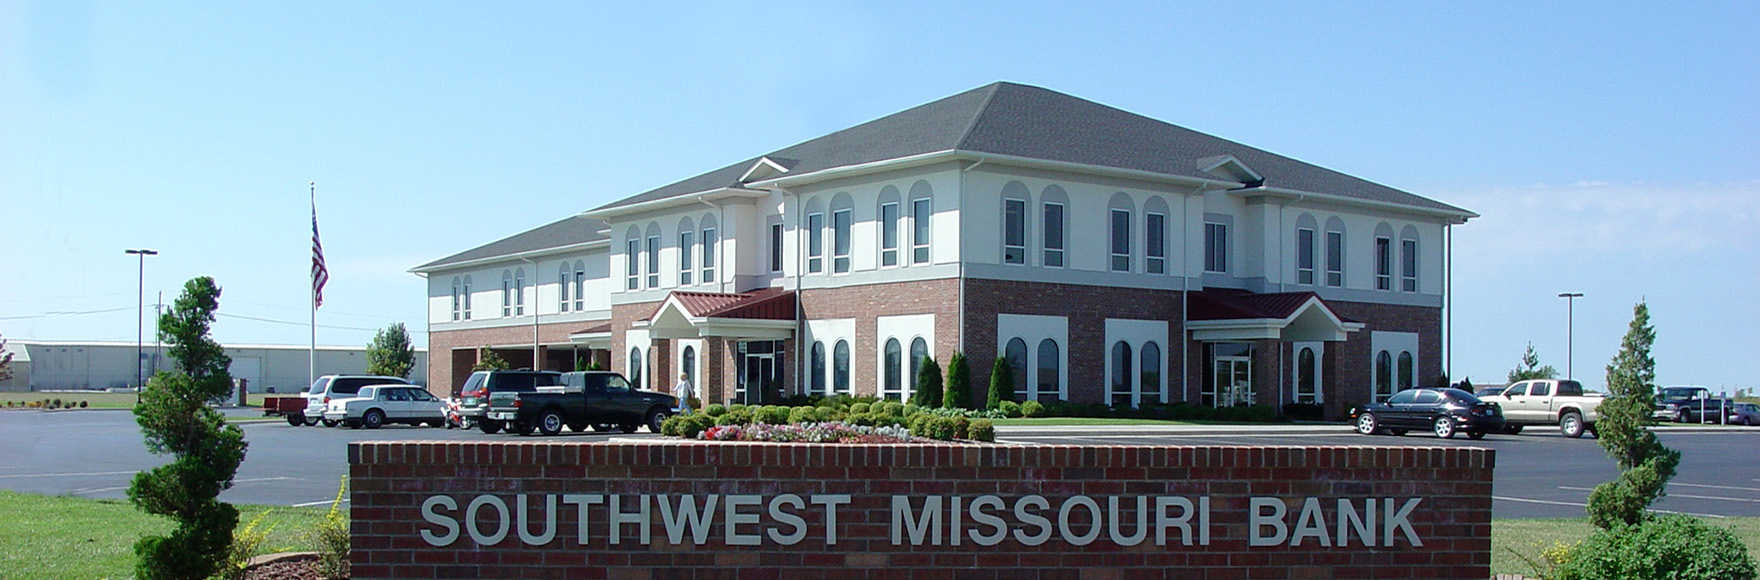 southwest missouri bank main office